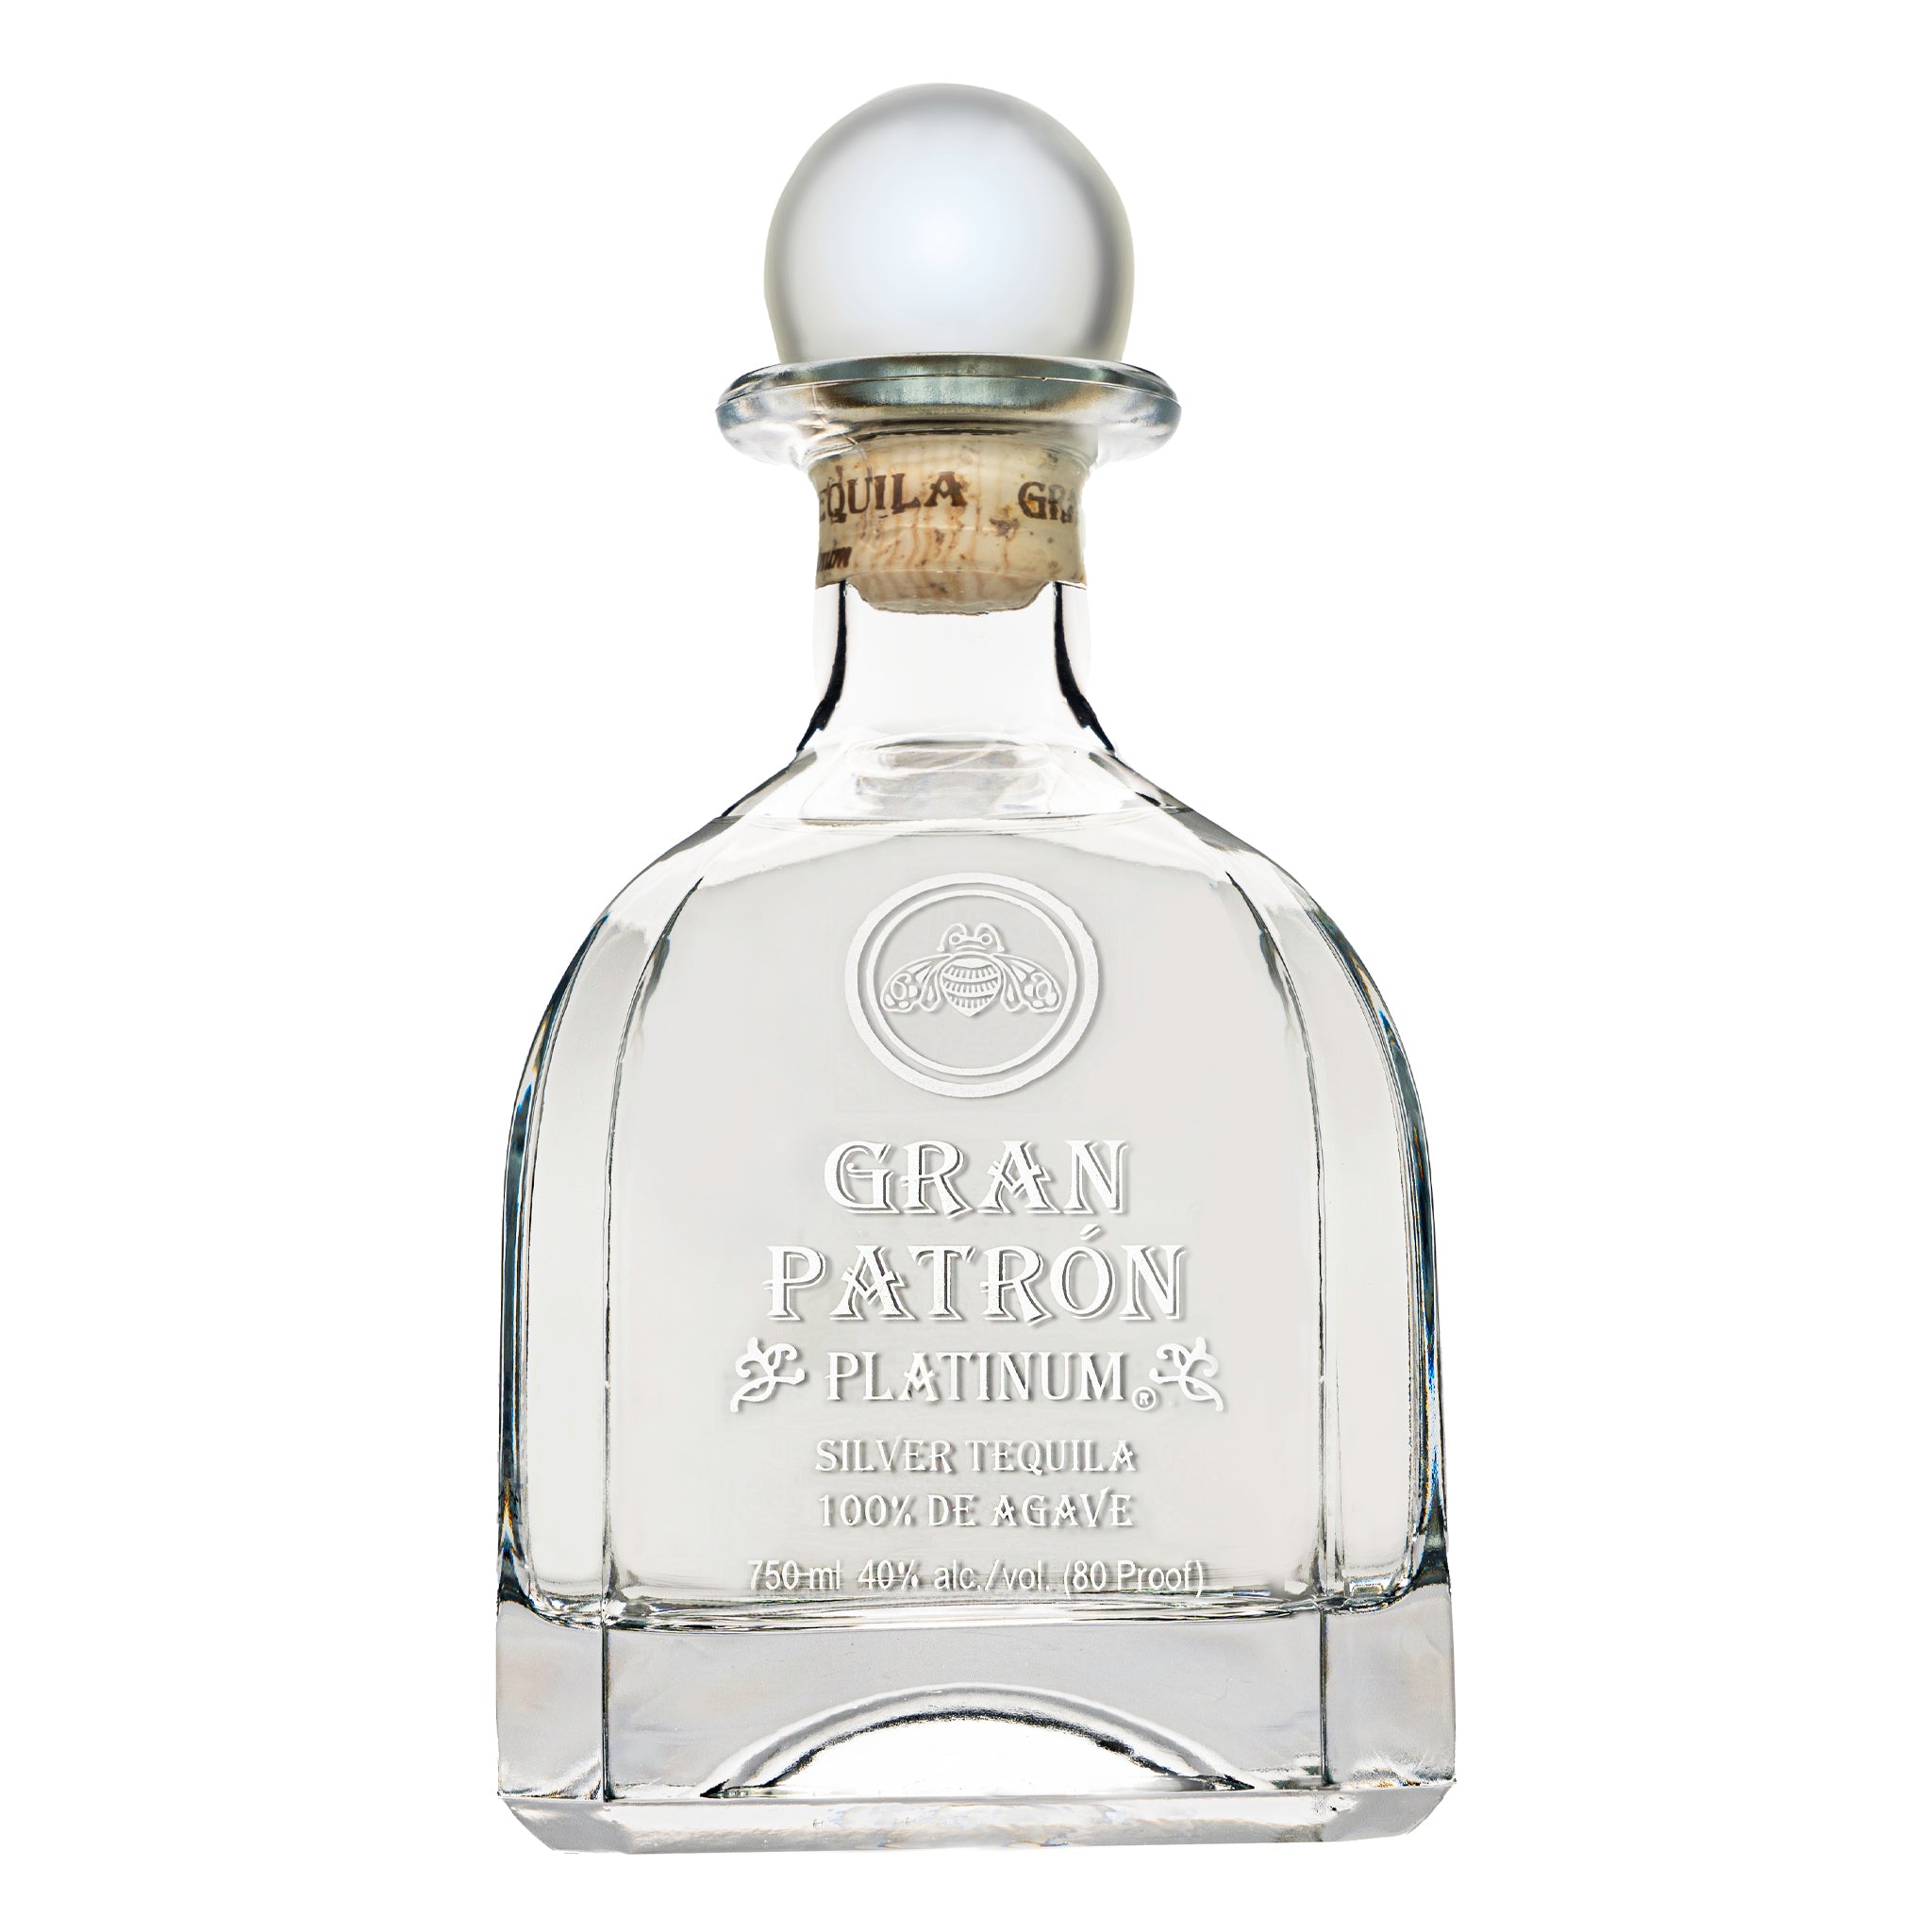 Gran Patron Platinum Silver Tequila